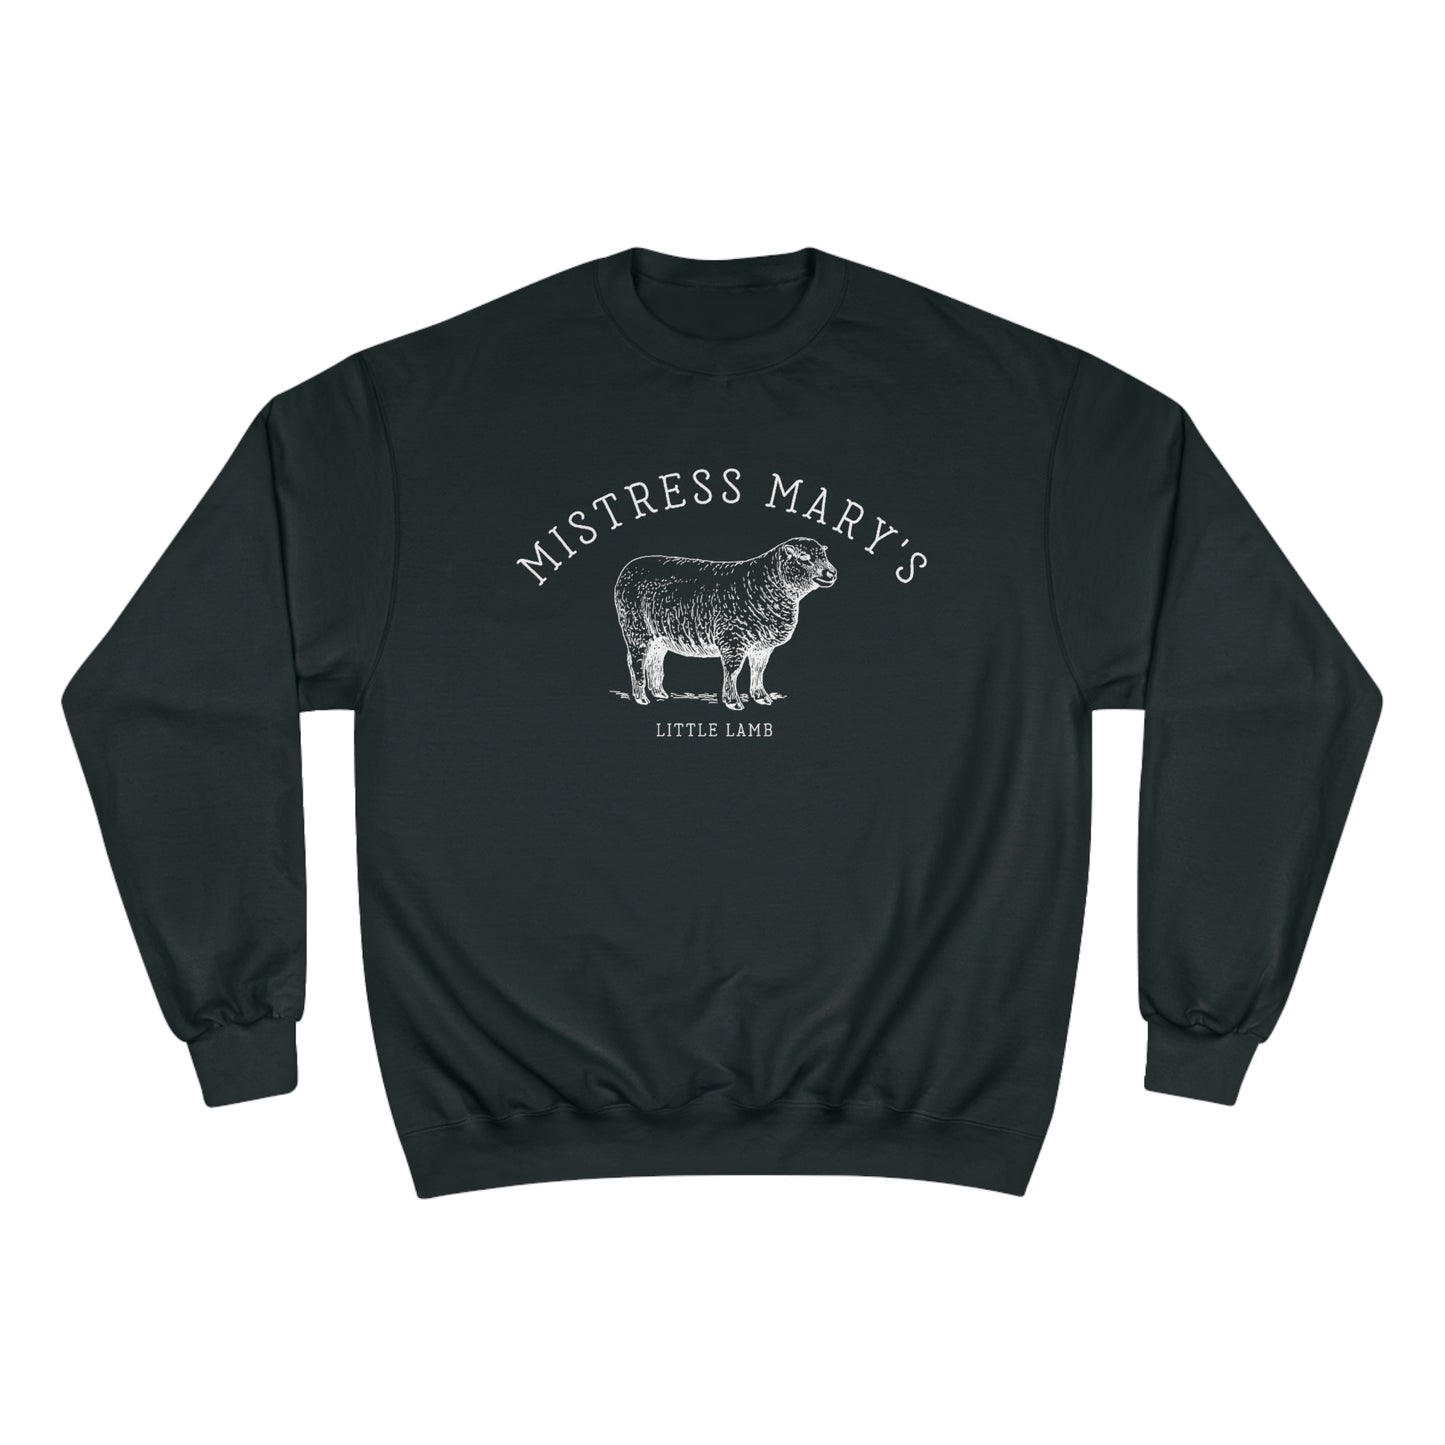 The little lamb | Champion Sweatshirt